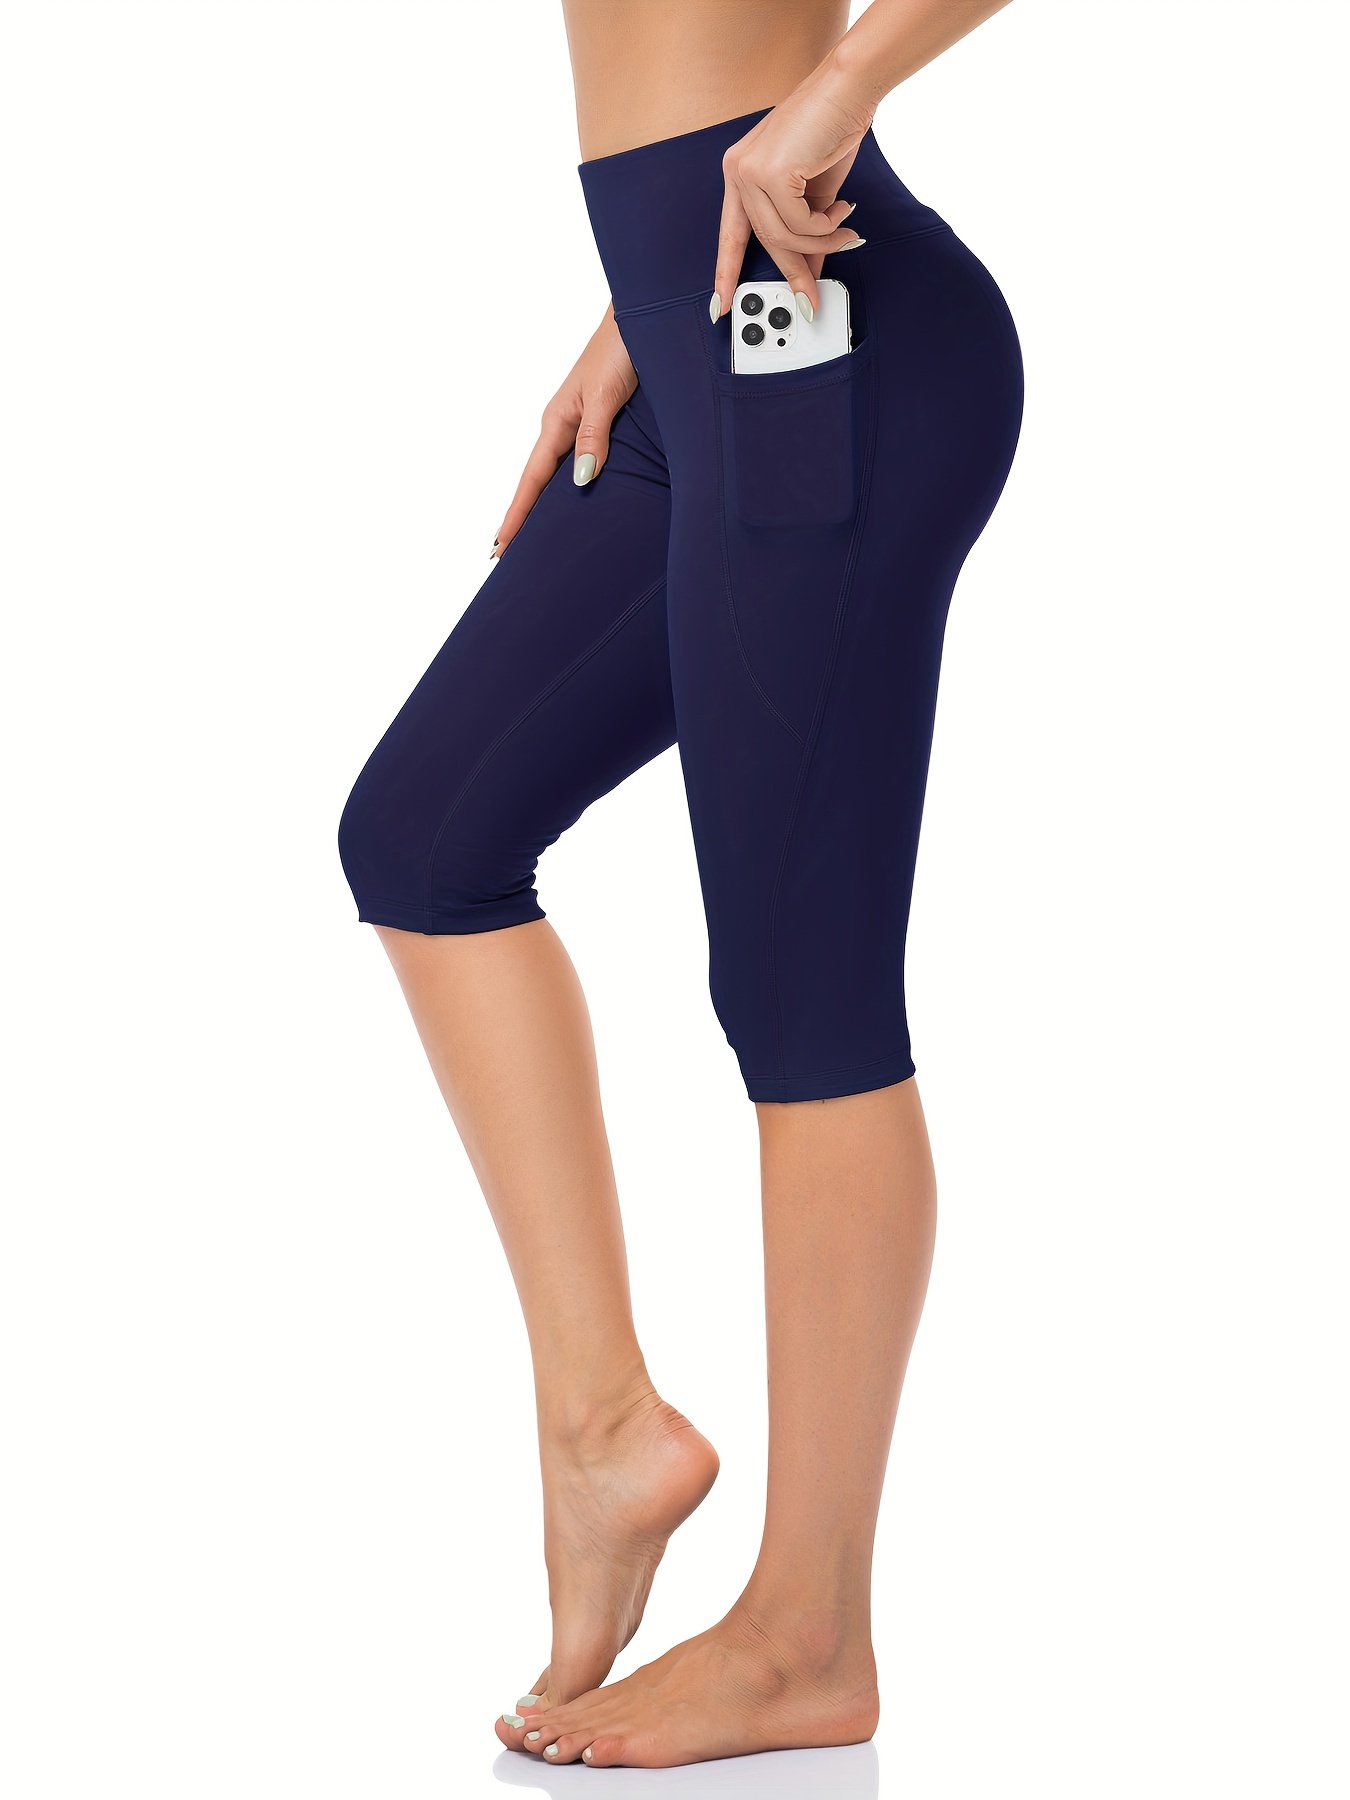 Owordtank Capris Yoga Leggings for Women with Pockets Casual Summer Workout  High Waist Capri Pants Knee Length Legging Brown L 